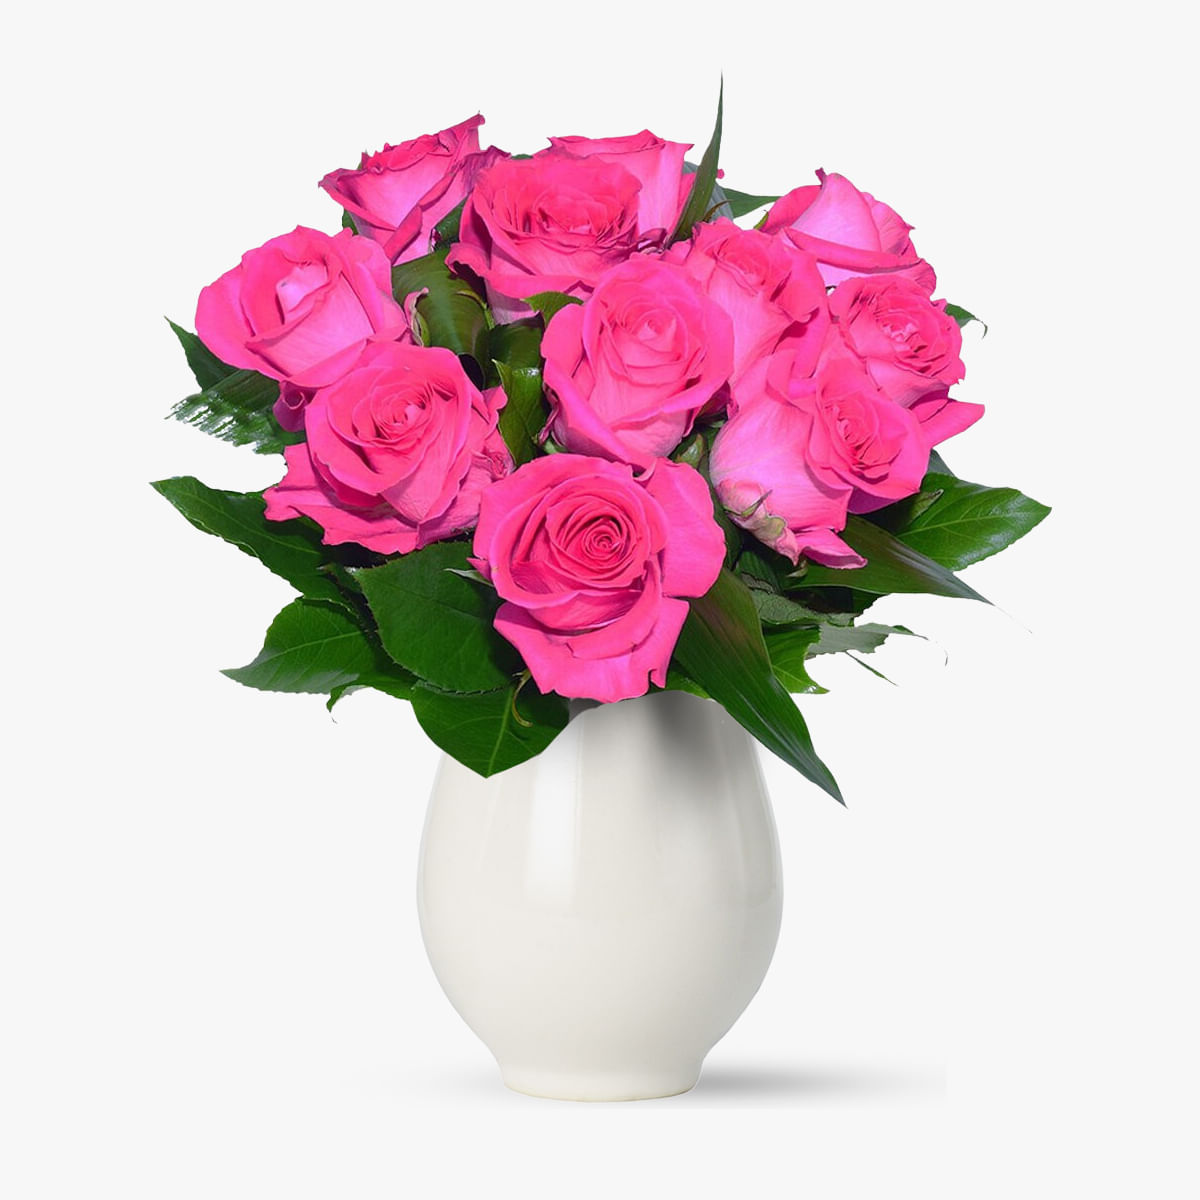 Buchet de 11 trandafiri roz – Standard Buchet imagine 2022